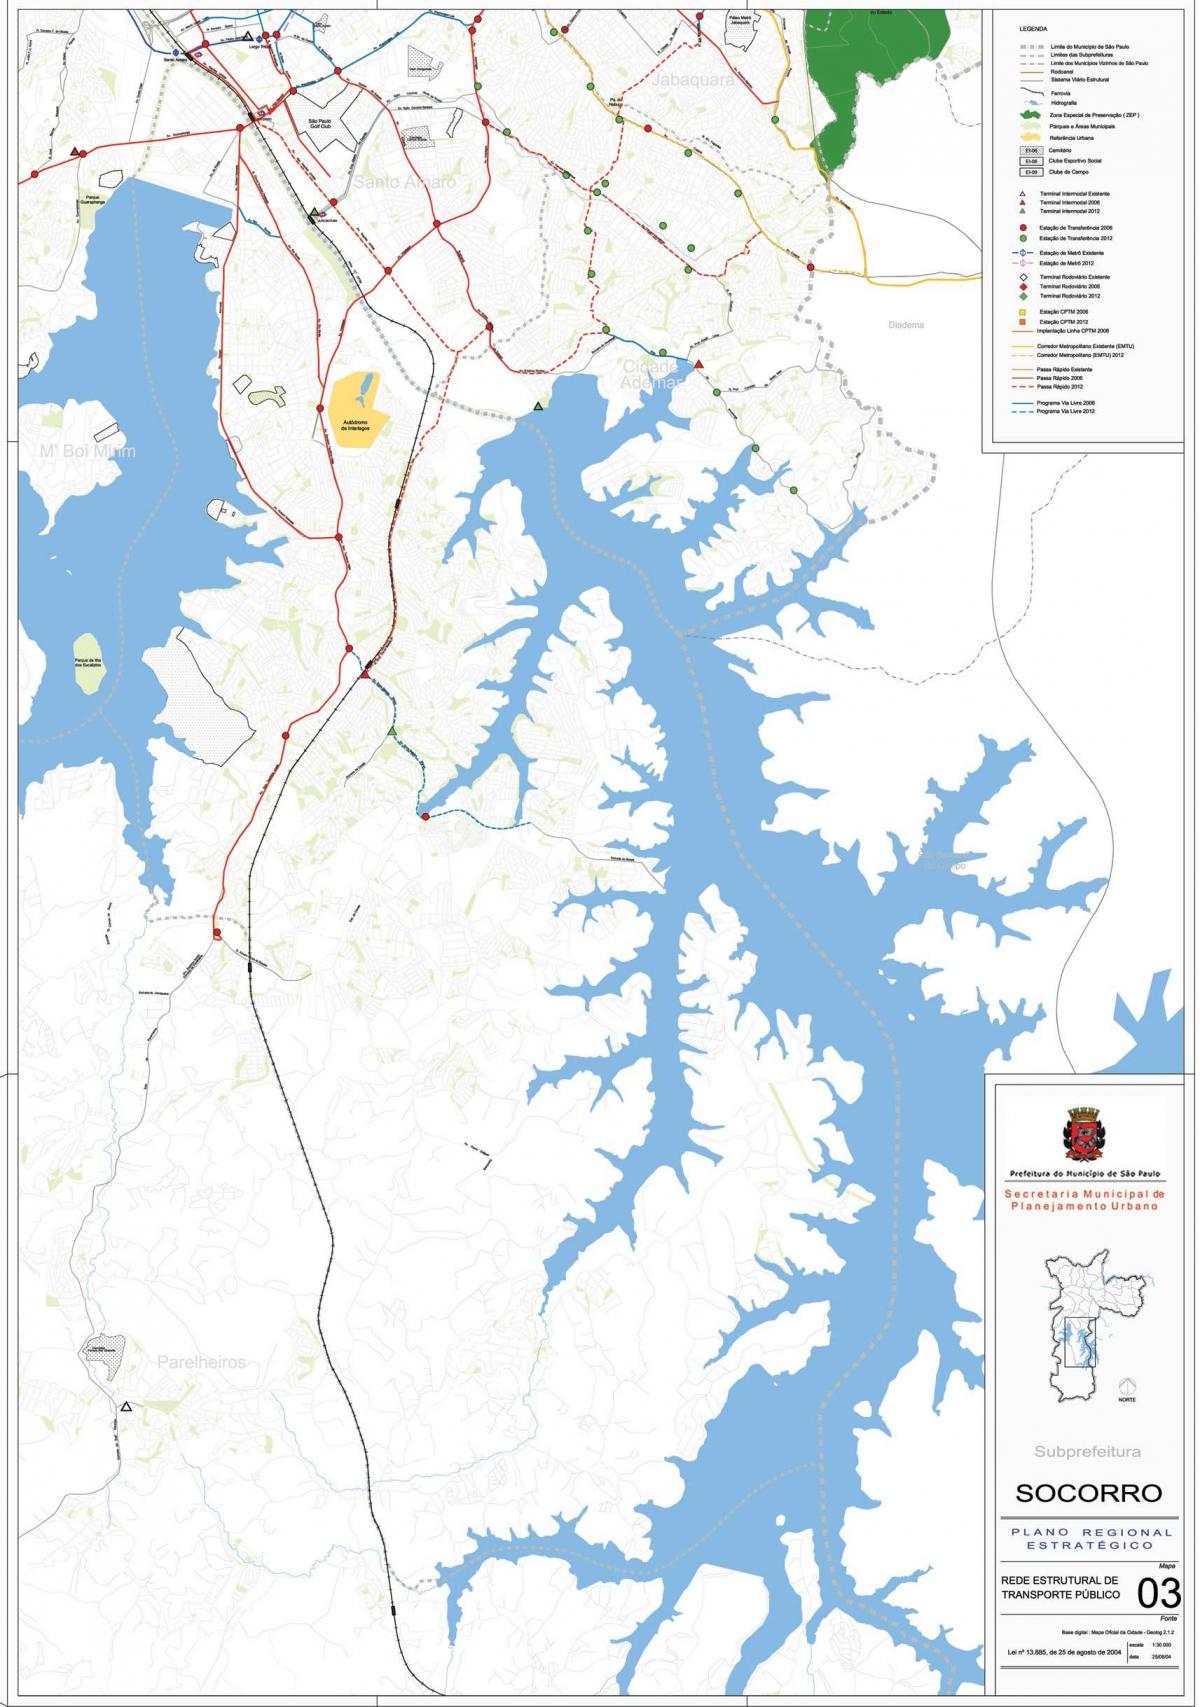 Peta Capela melakukan Socorro São Paulo - Jalan